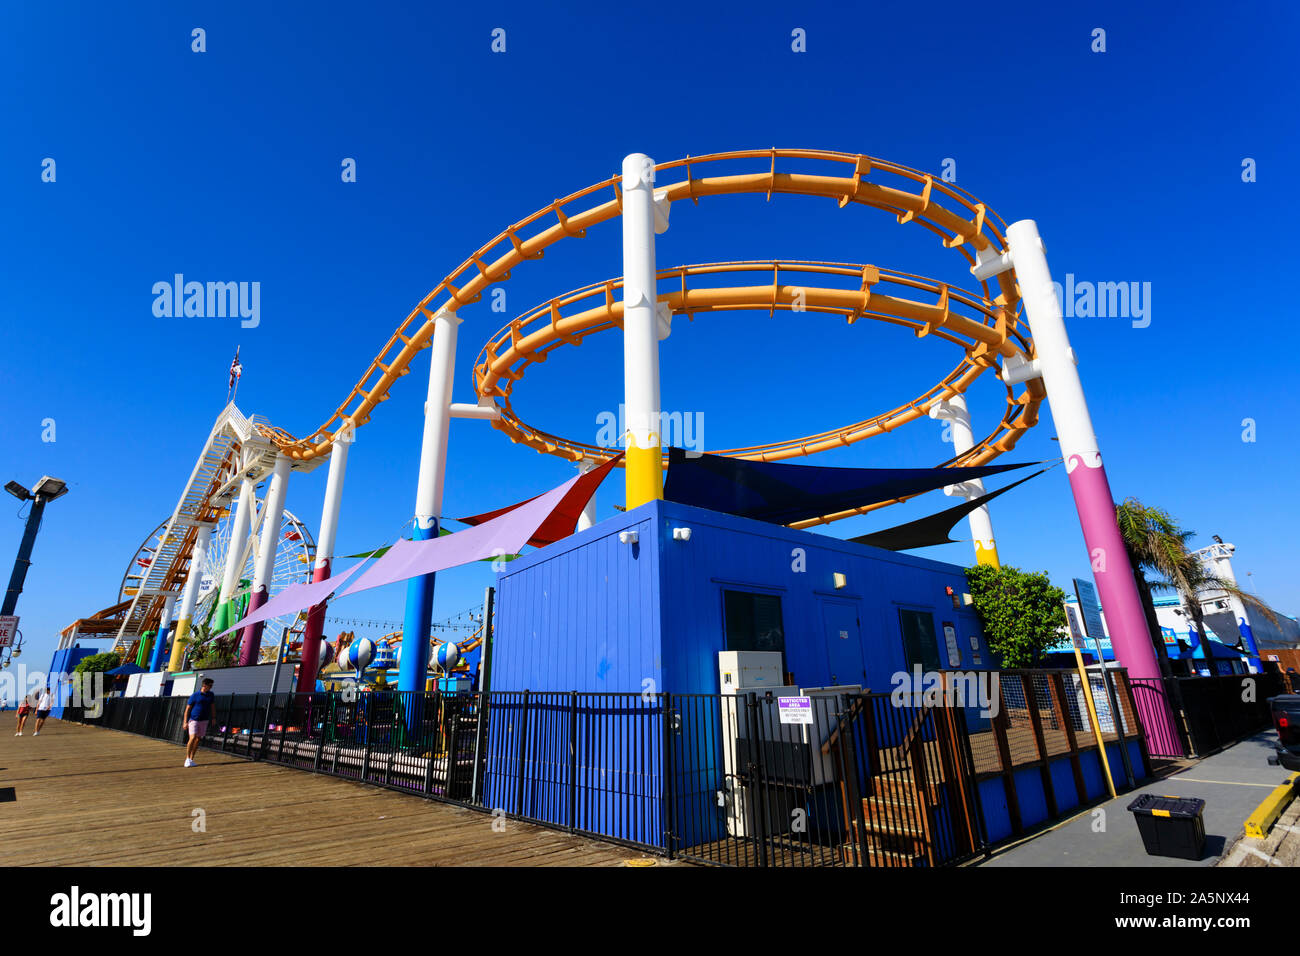 Roller coaster on Santa Monica pier, Los Angeles, California, United States of America. USA. October 2019 Stock Photo